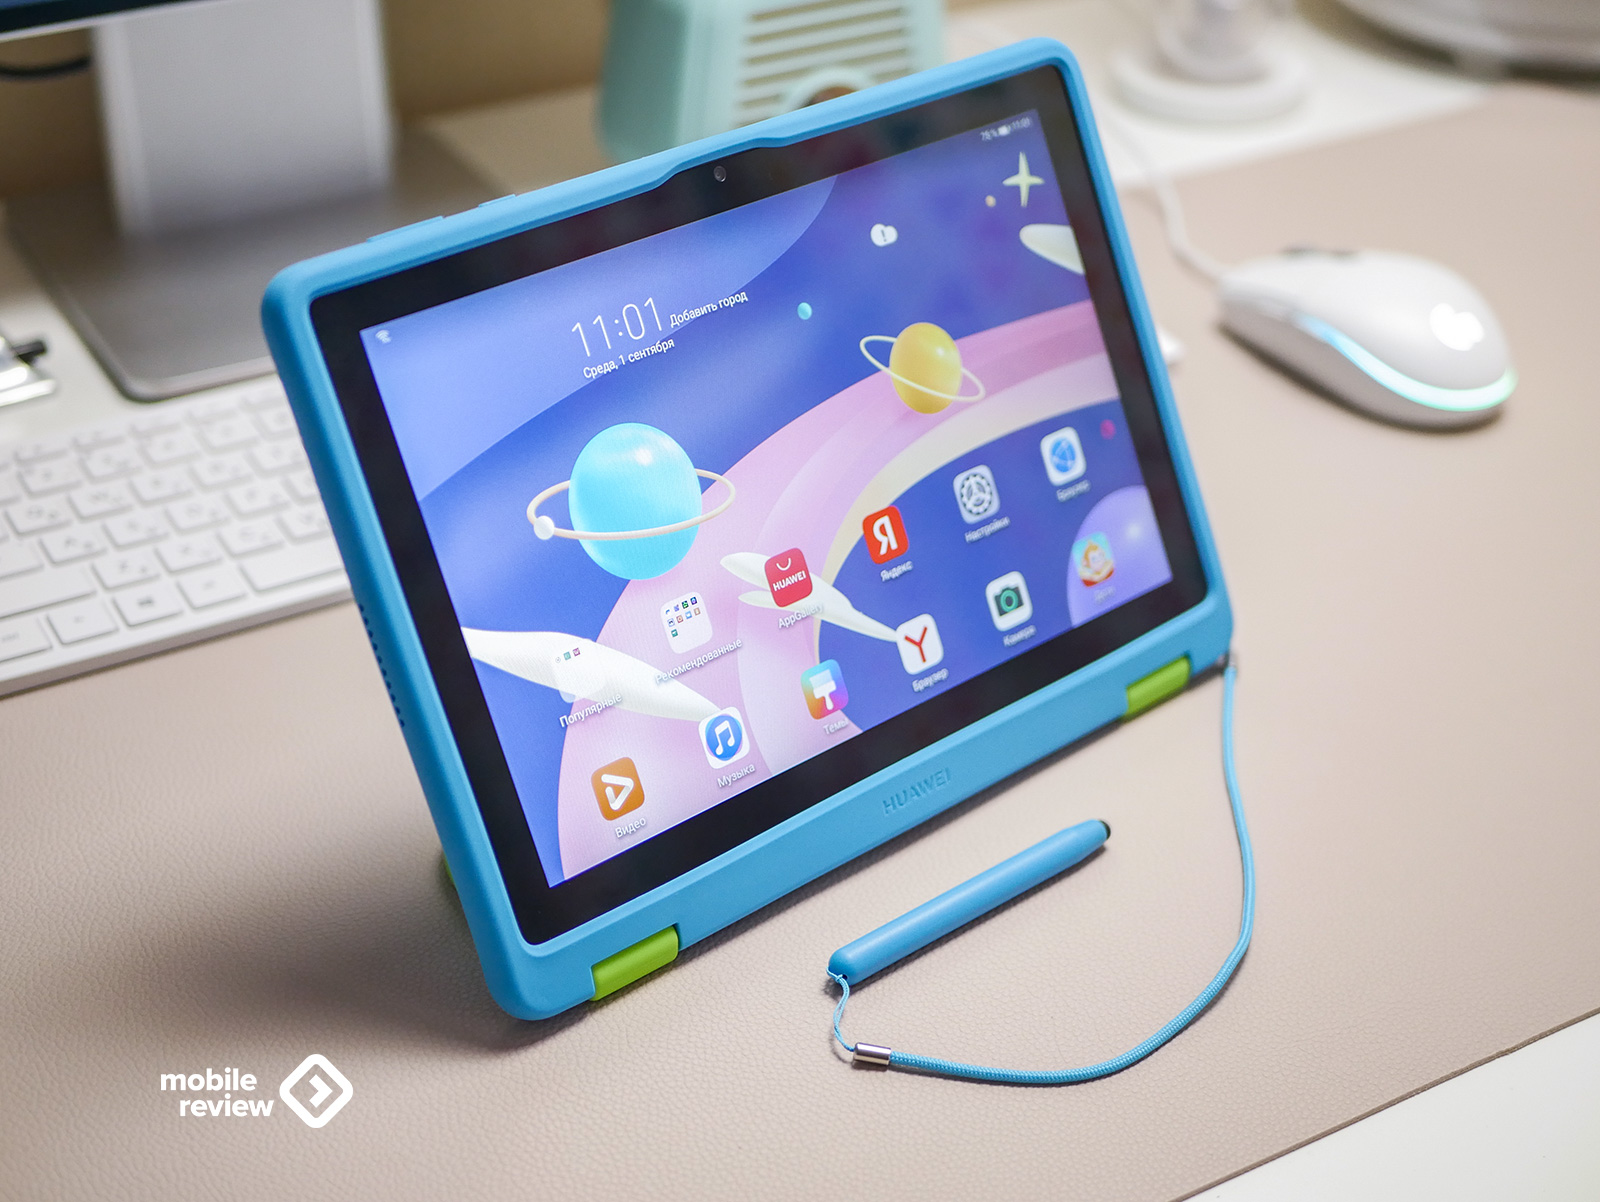 Обзор детского планшета Huawei MatePad T10